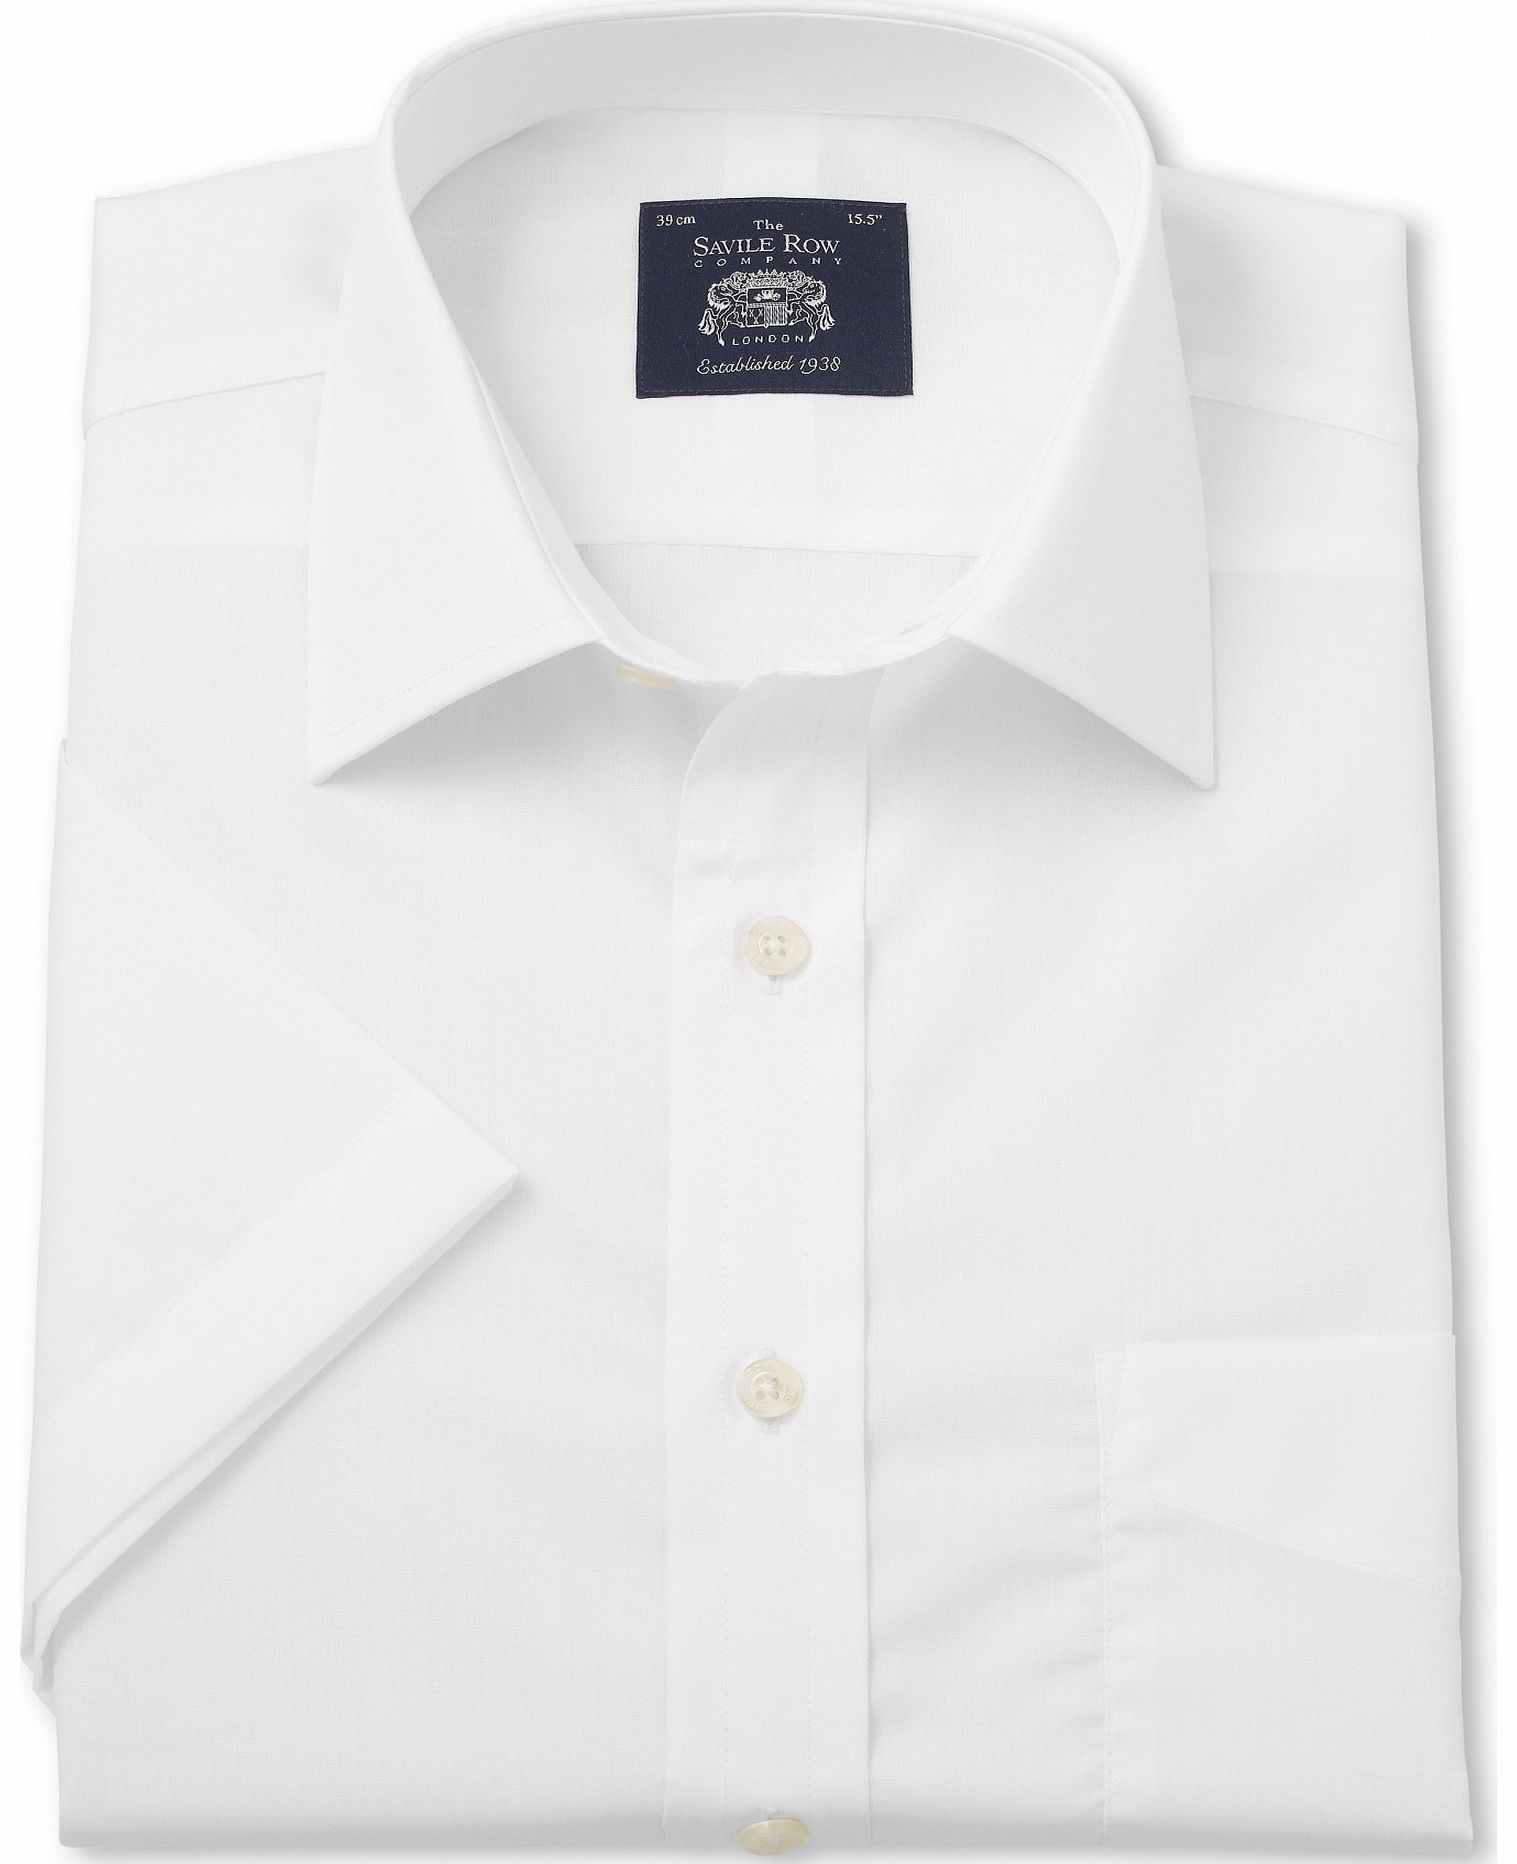 Savile Row Company White Poplin Classic Fit Short Sleeve Shirt 18